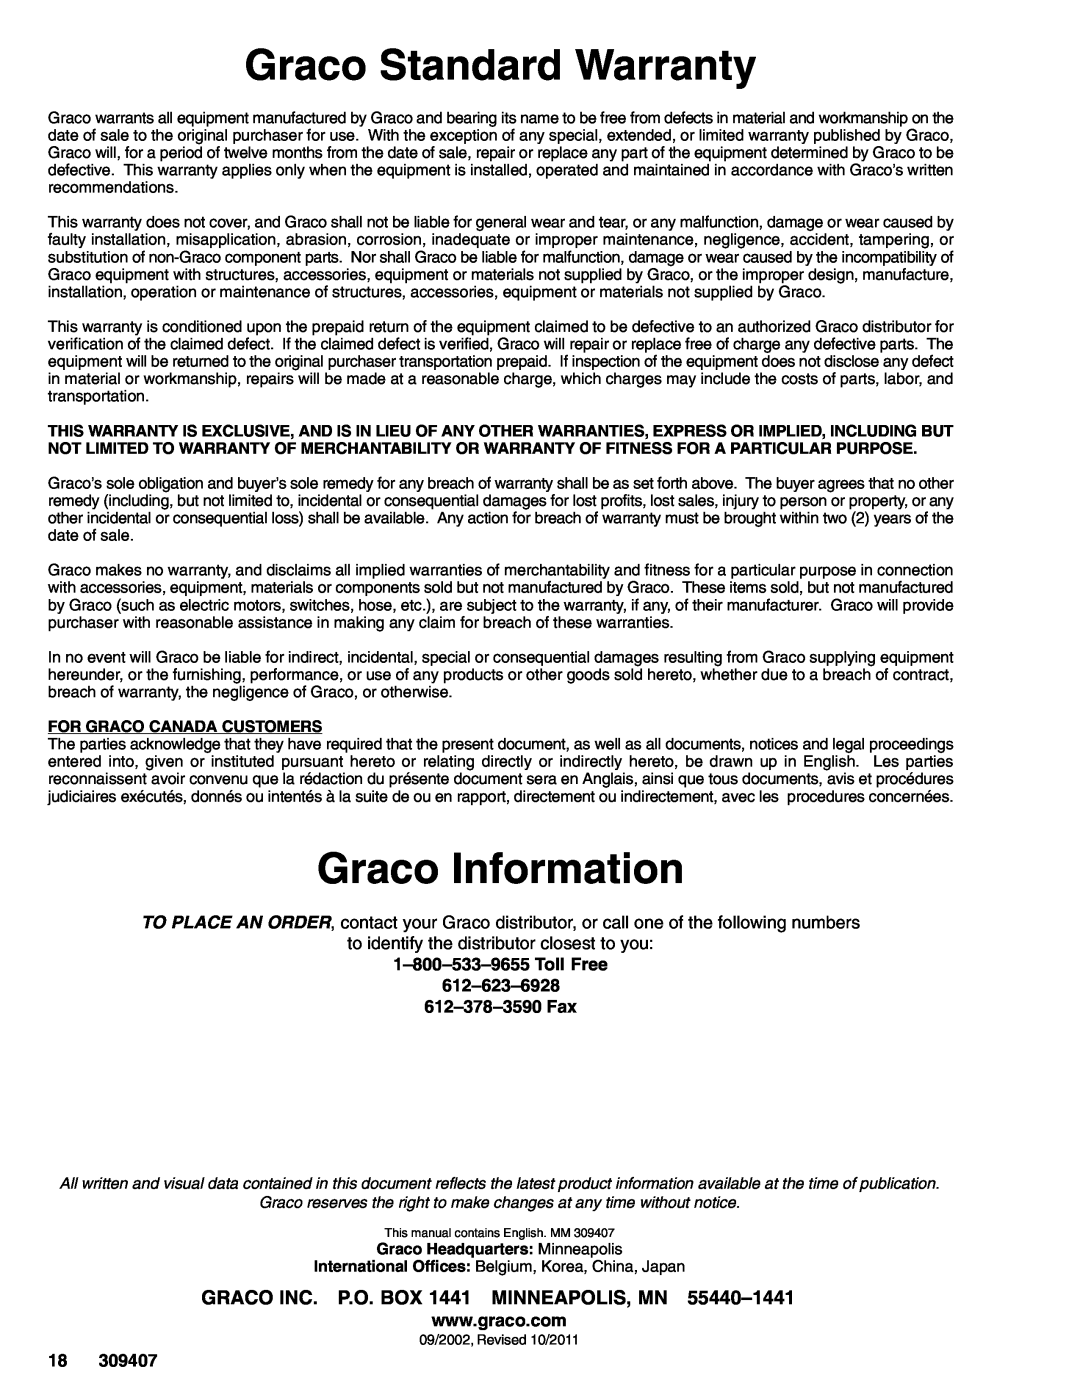 Graco 965124 Graco Standard Warranty, Graco Information, For Graco Canada Customers, Graco Headquarters Minneapolis 